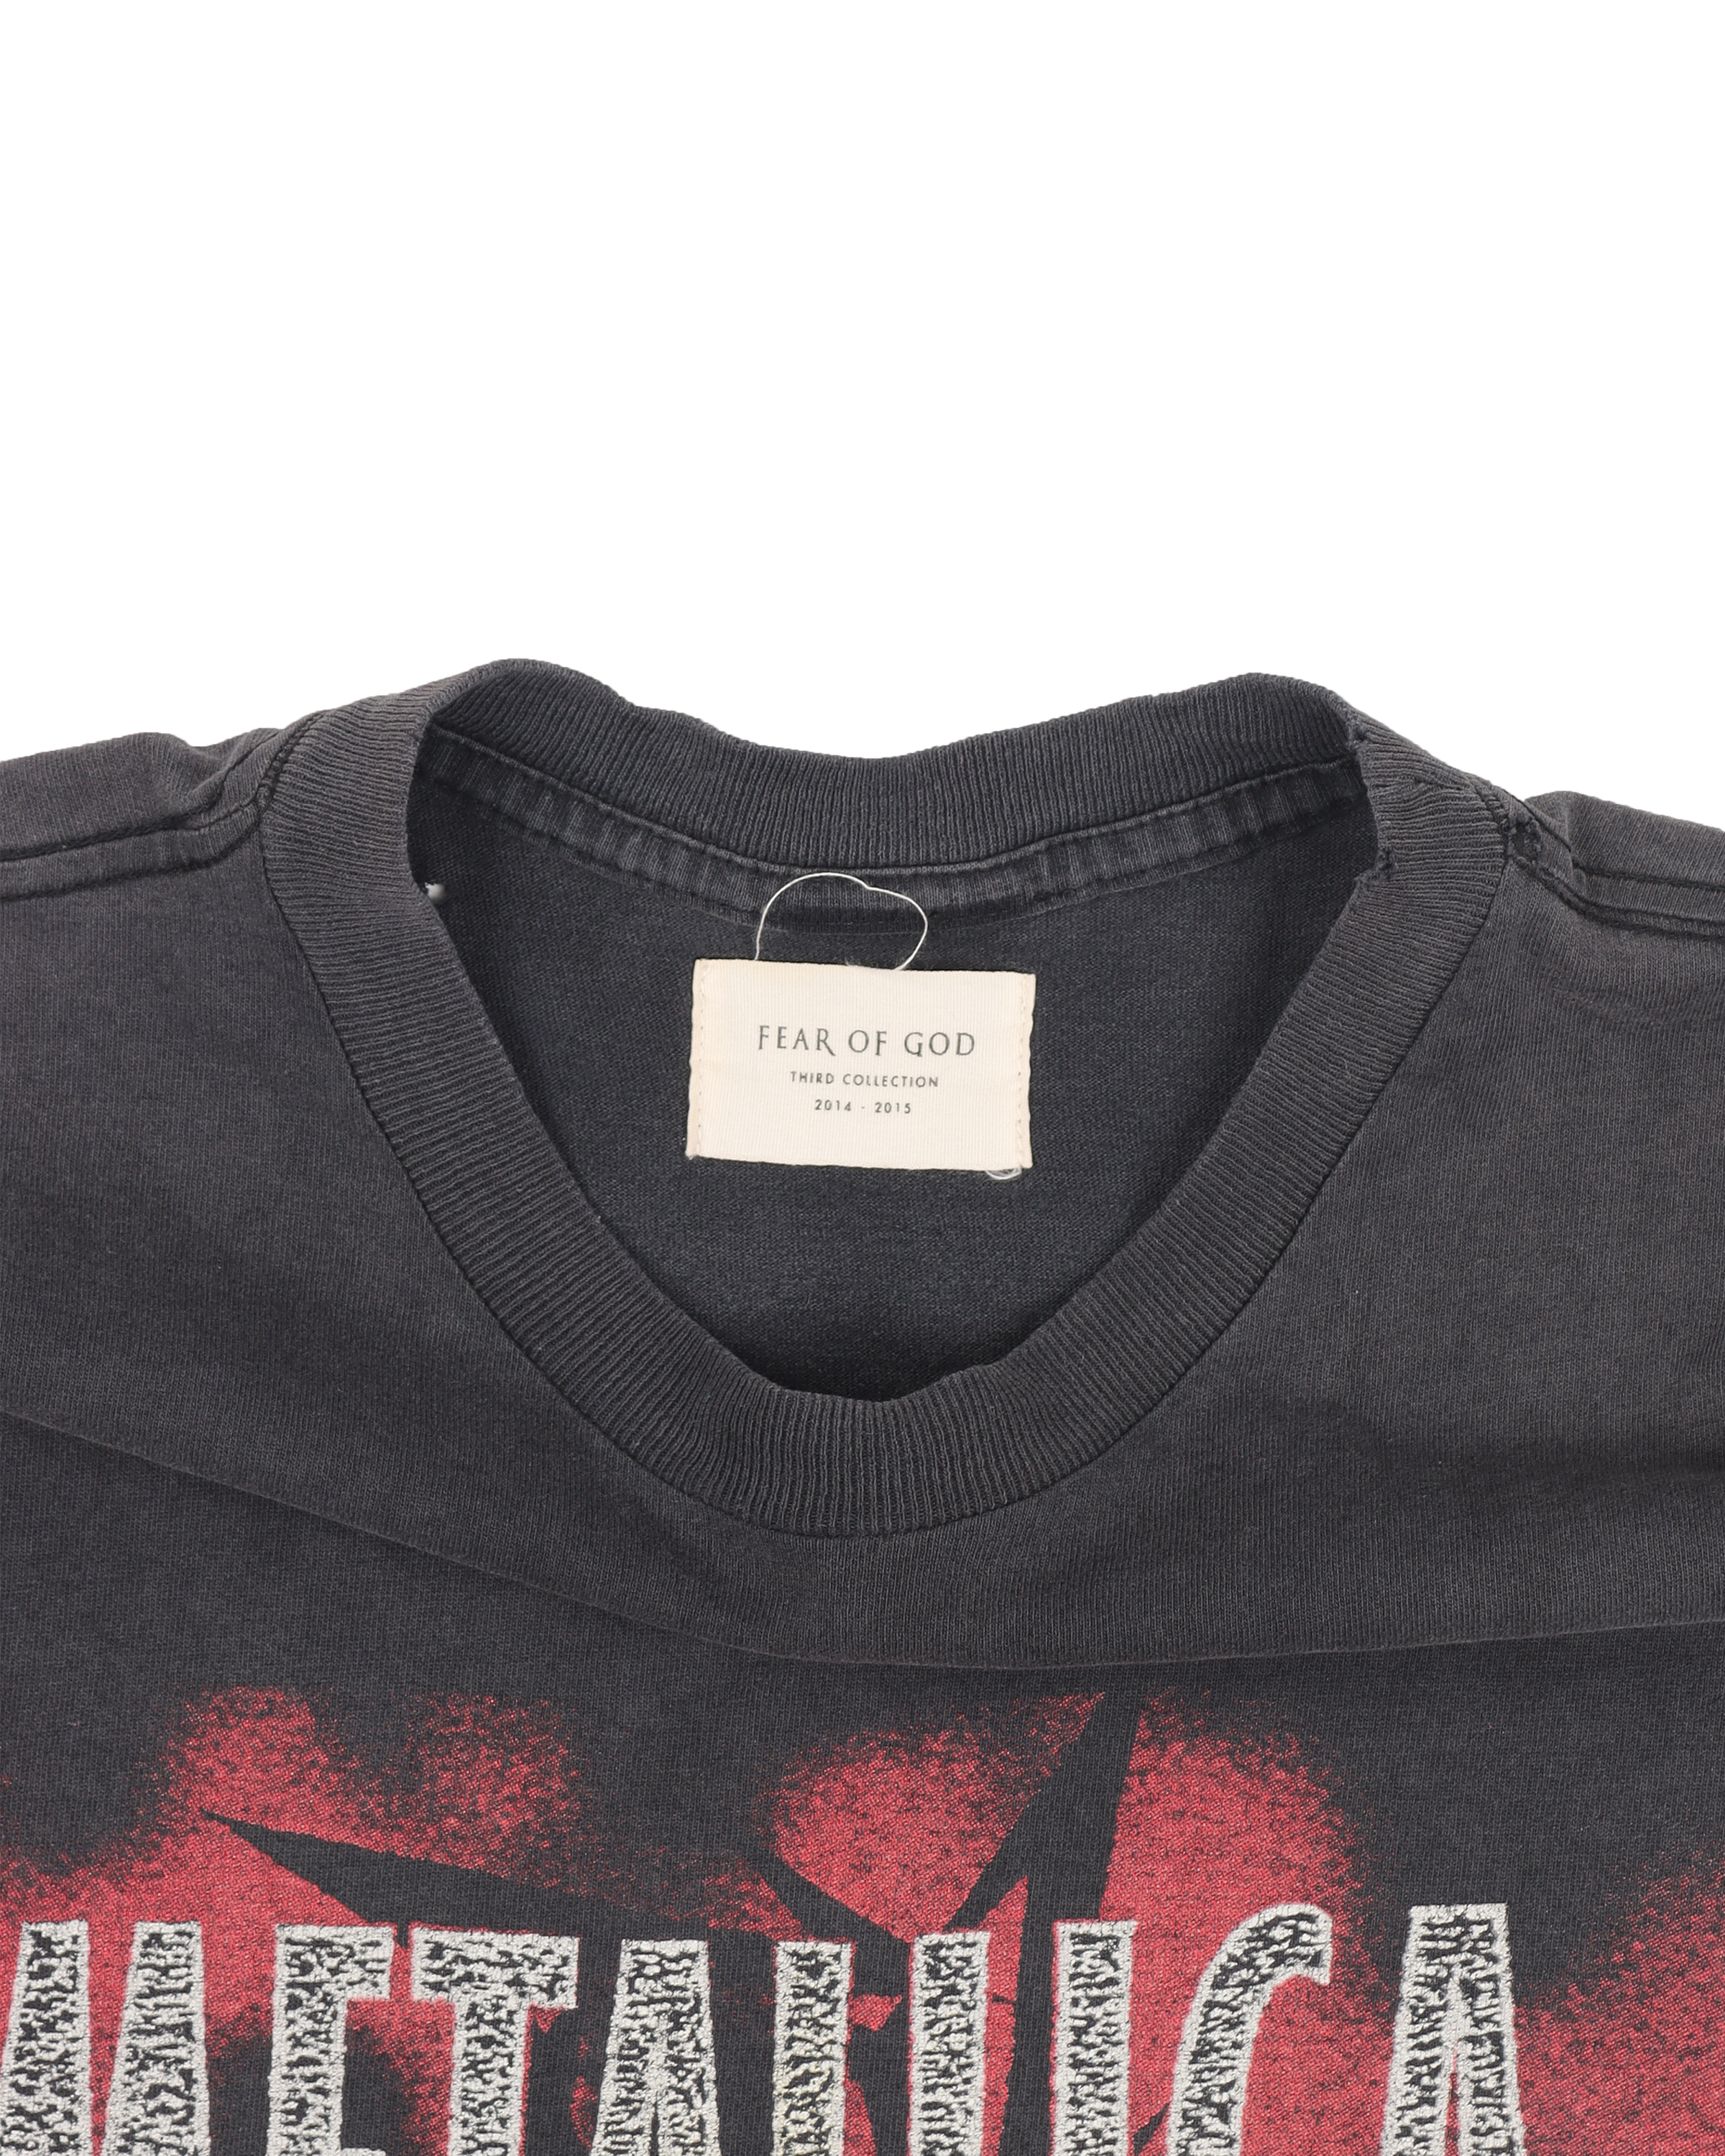 Resurrected Third Collection Metallica T-Shirt